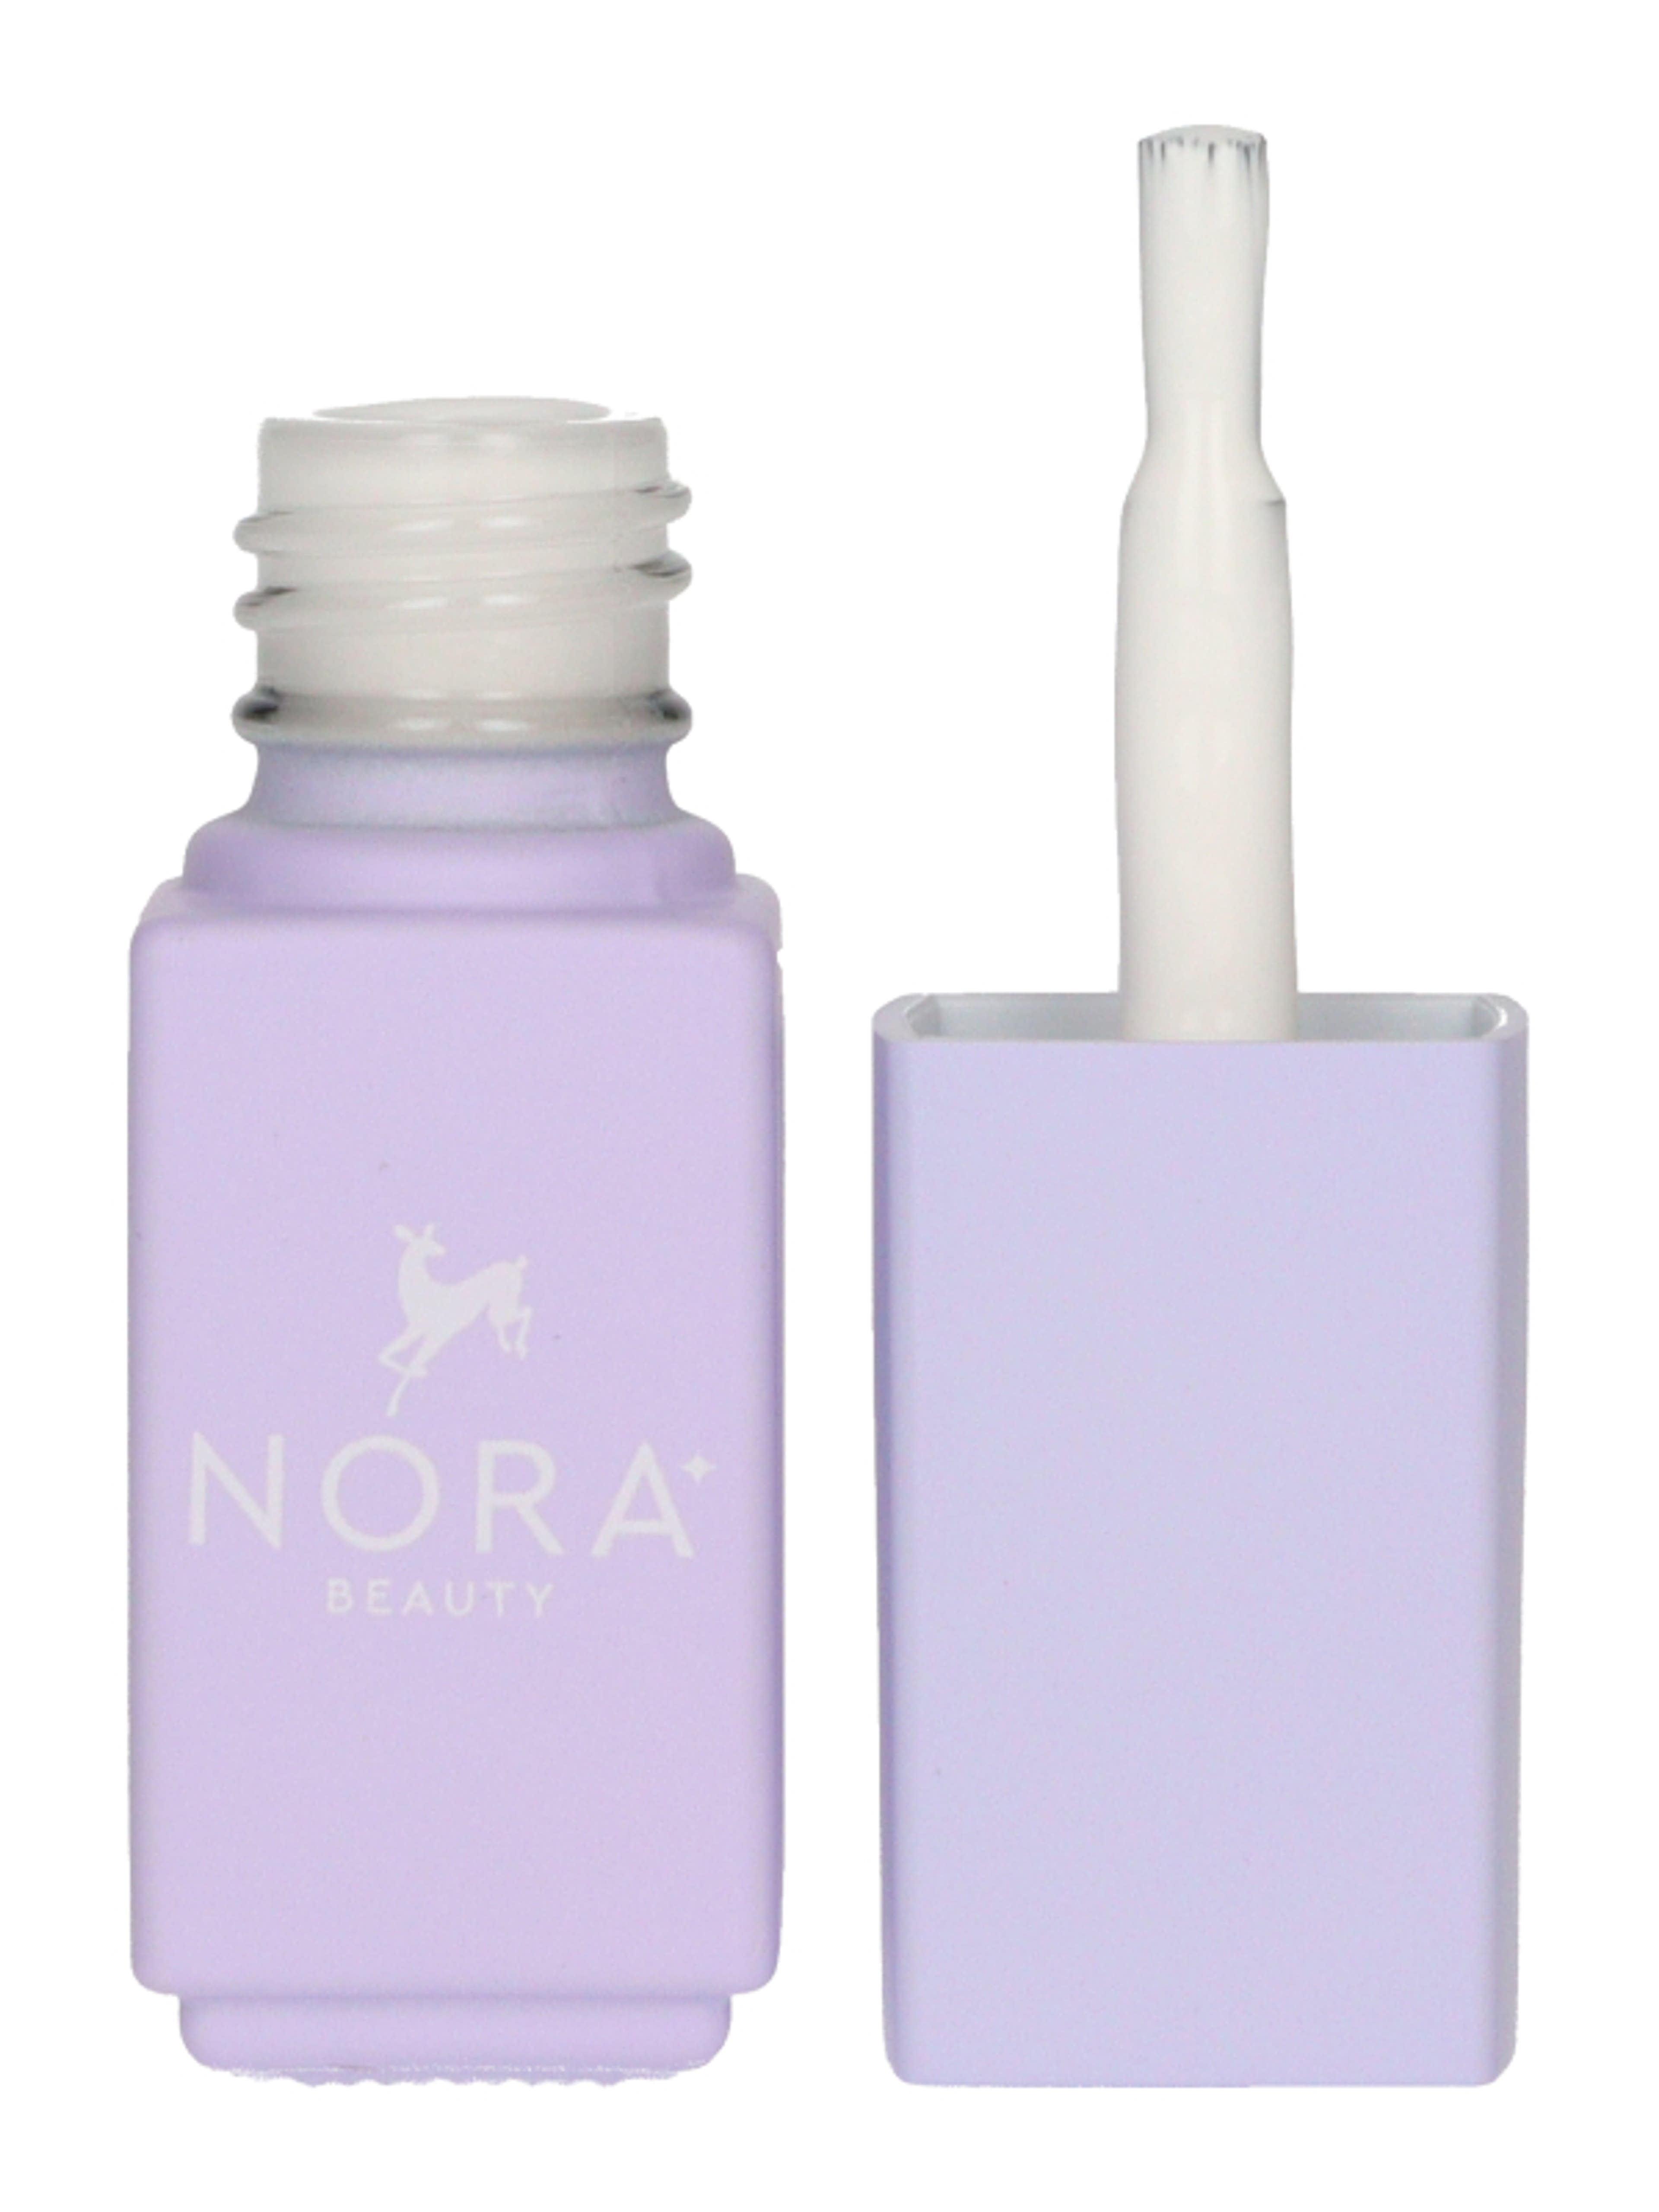 Nora Beauty UV lakkzselé /tb-03 snow white - 1 db-3